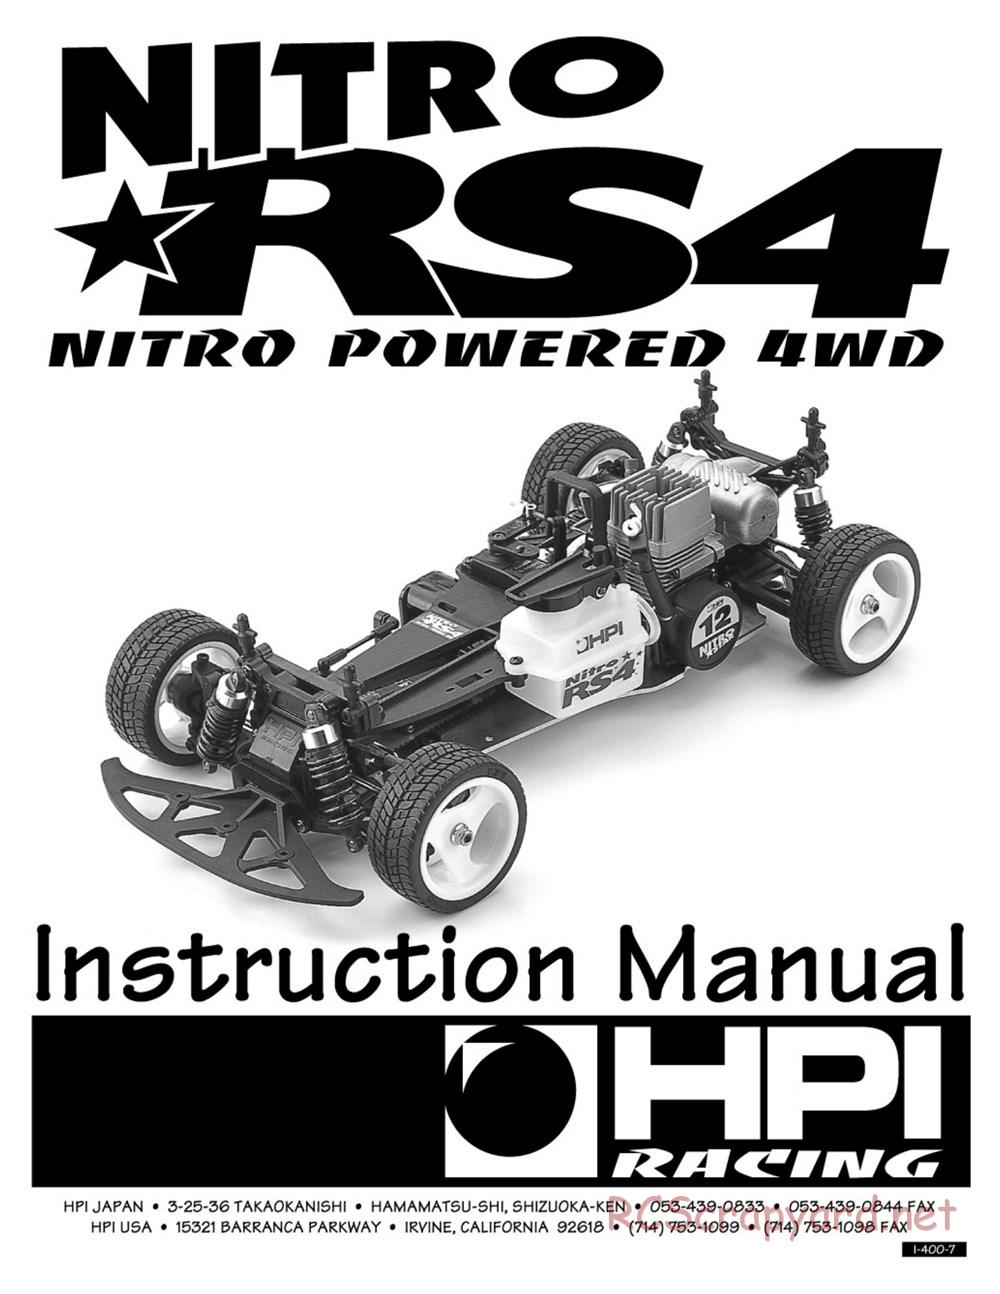 HPI - Nitro RS4 - Manual - Page 1